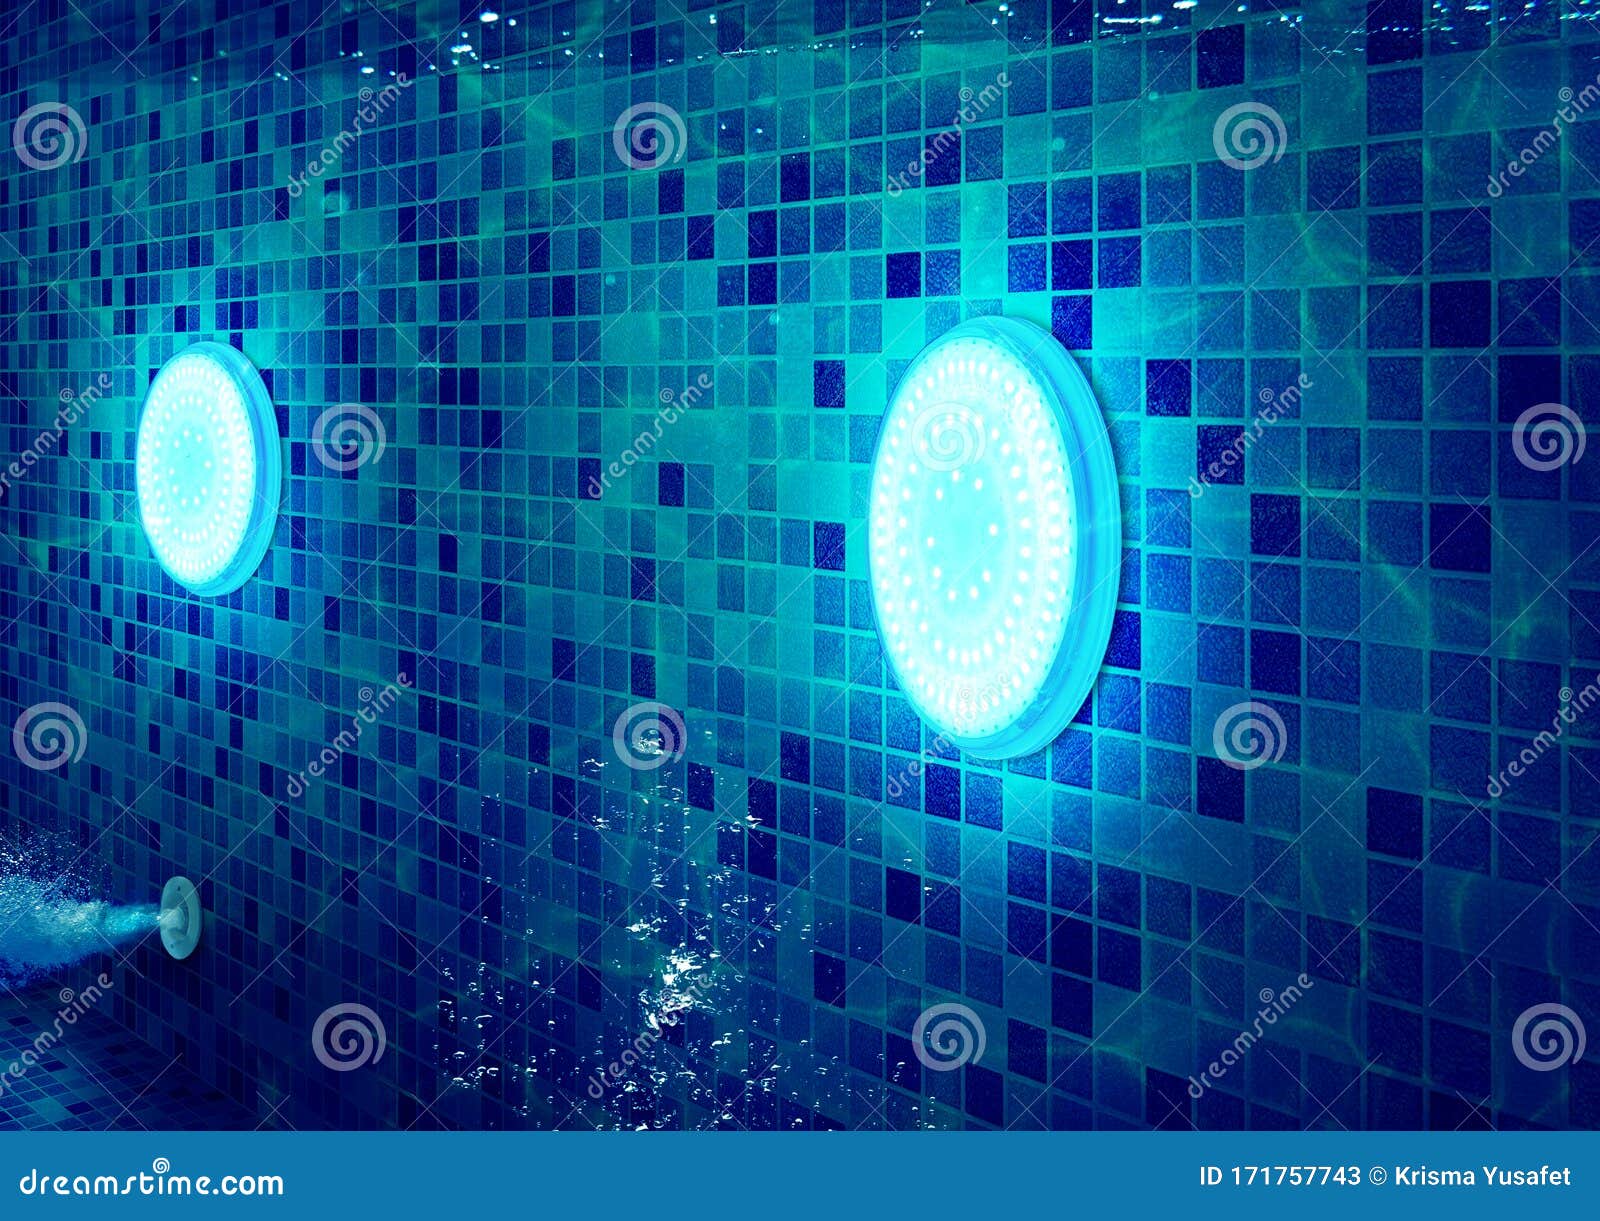 Underwater Led Light For Swimming Pool Application Stock Image Image Of Swimming Lighting 171757743